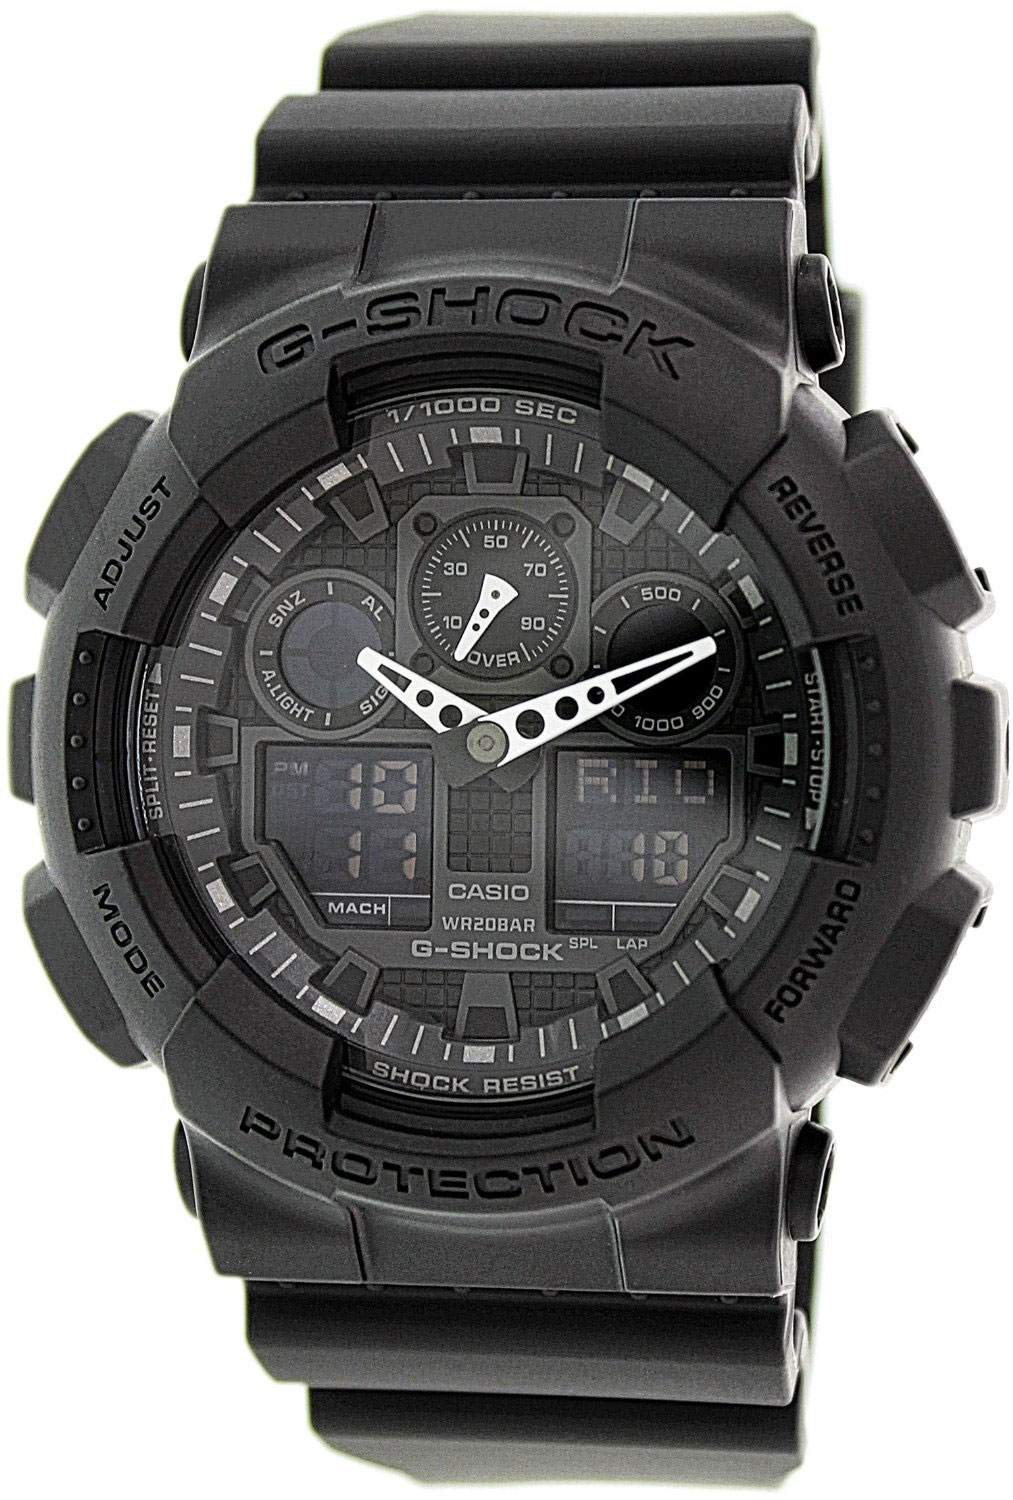 GShock G100 Big Combi Military Series Wrist Watch in Matte Black